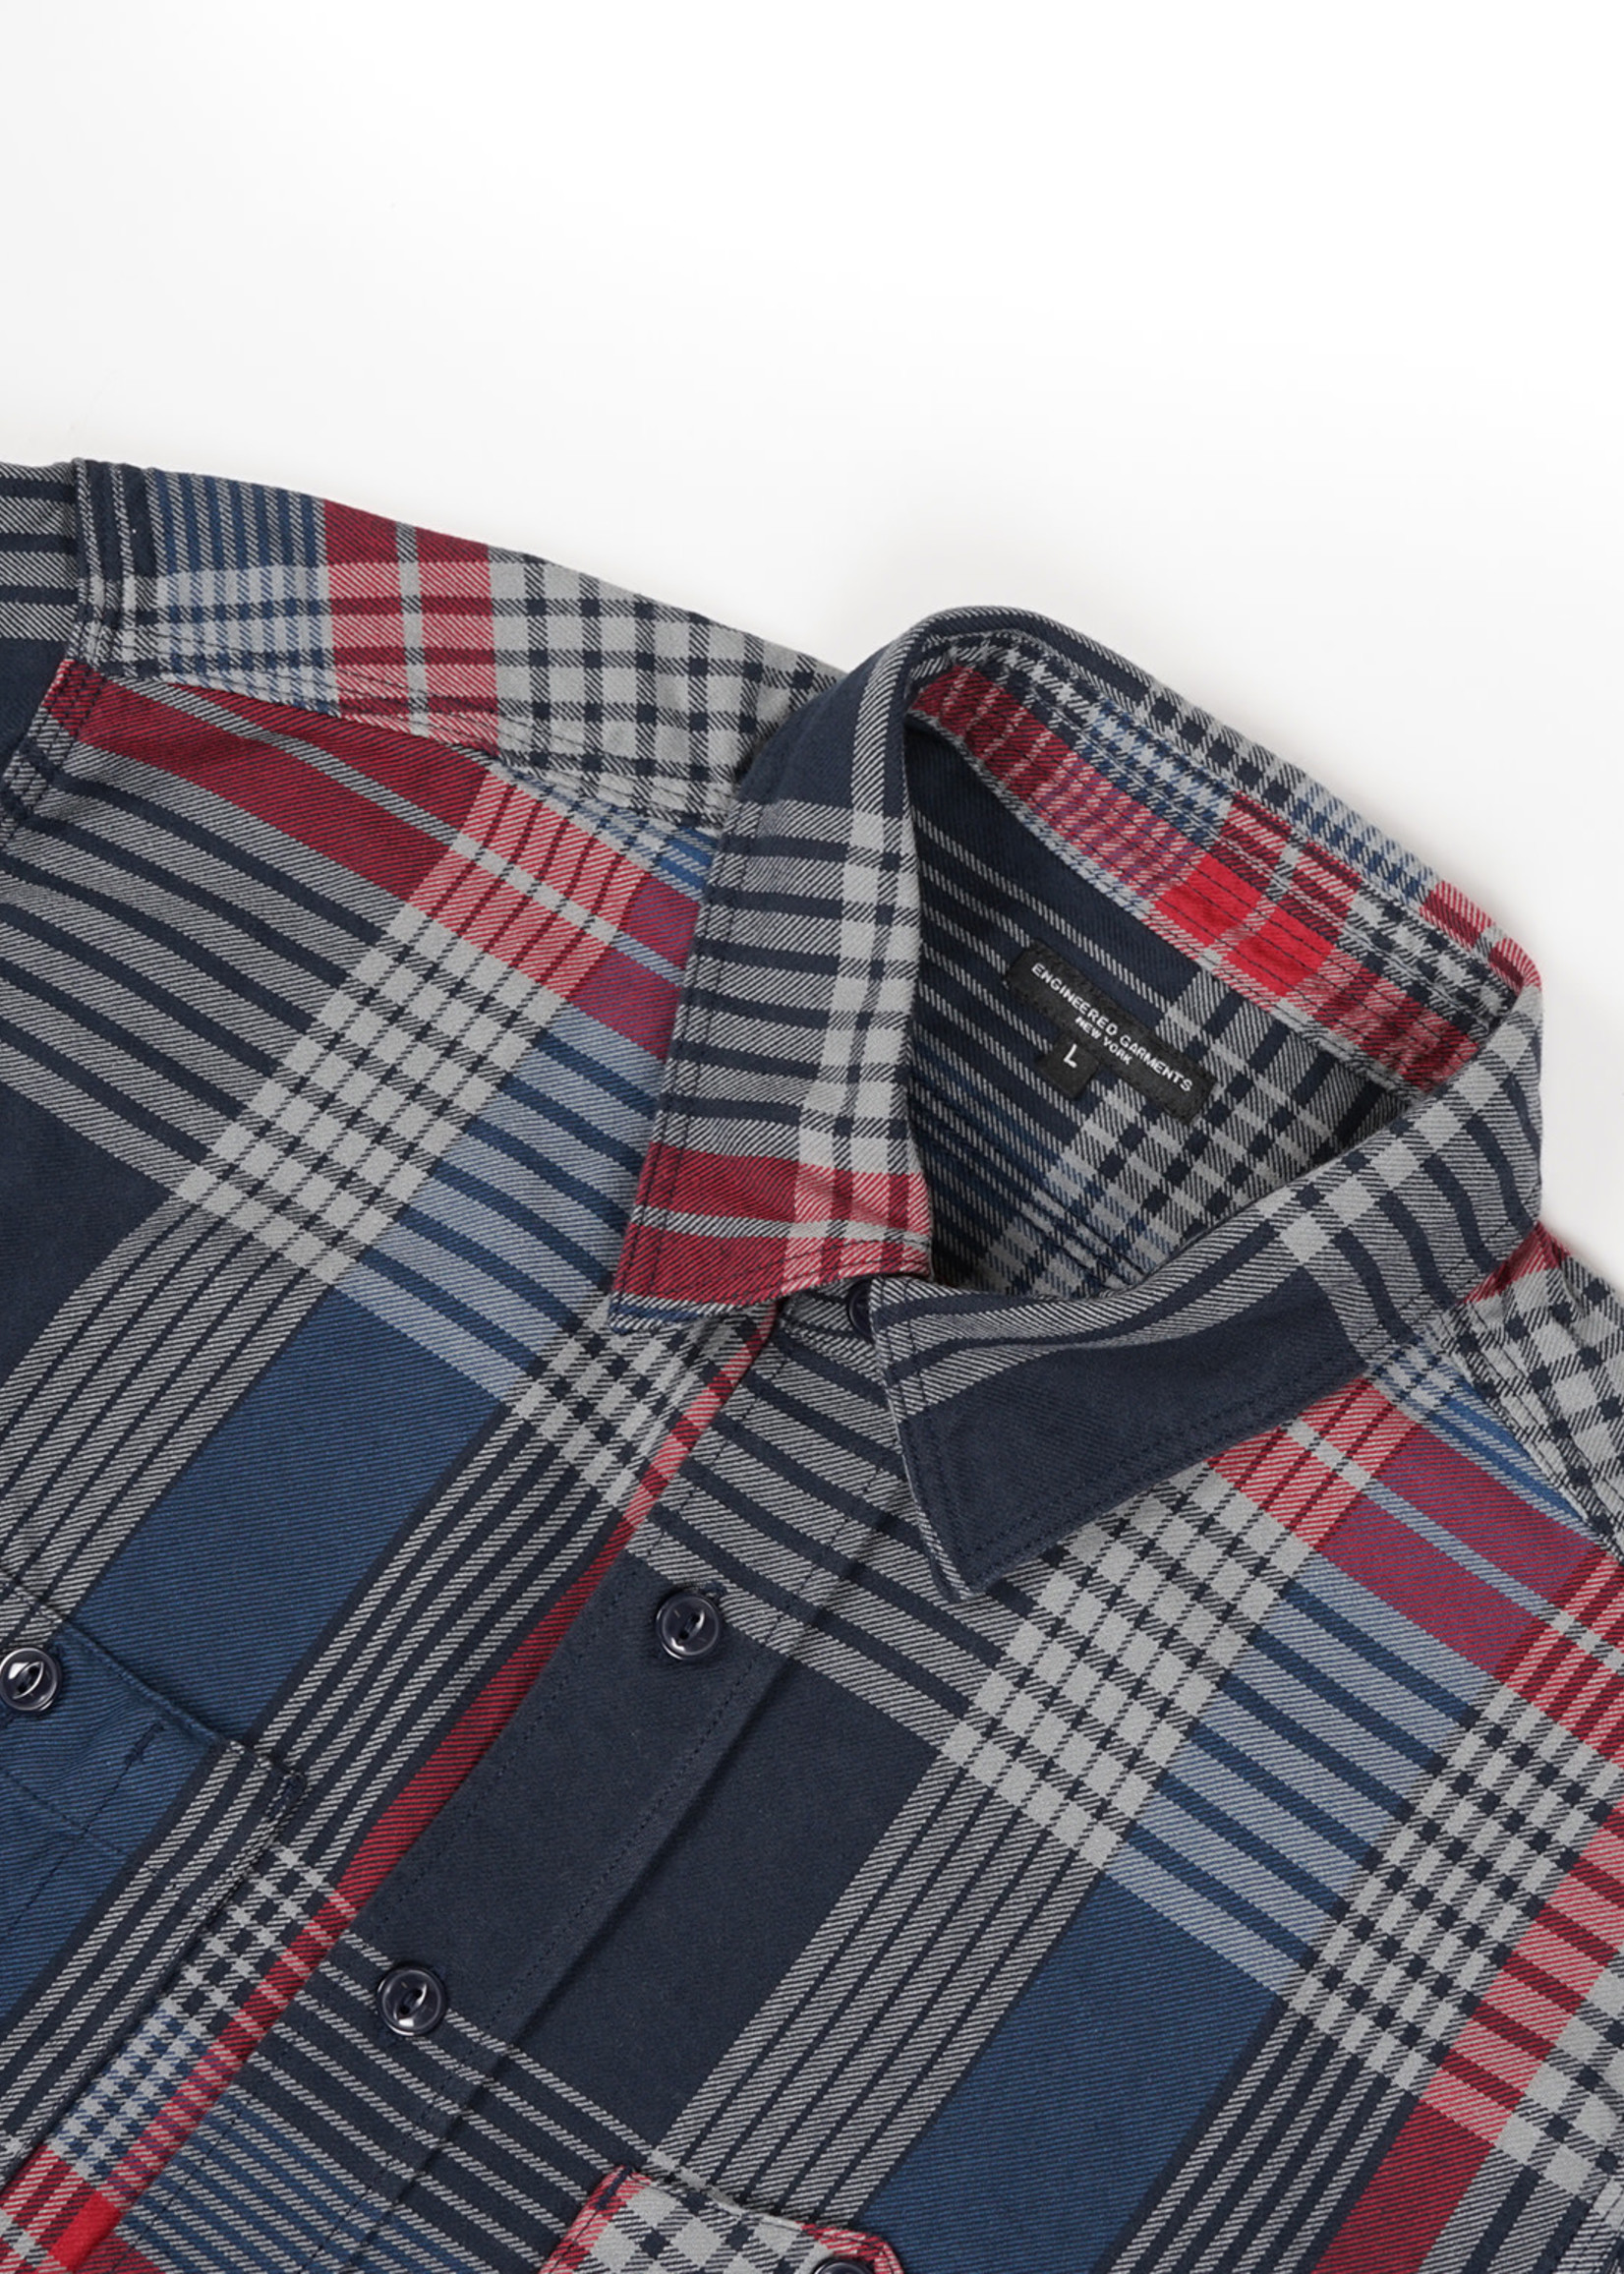 Engineered Garments Engineered Garments Work Shirt Navy/Grey/Red Cotton Twill